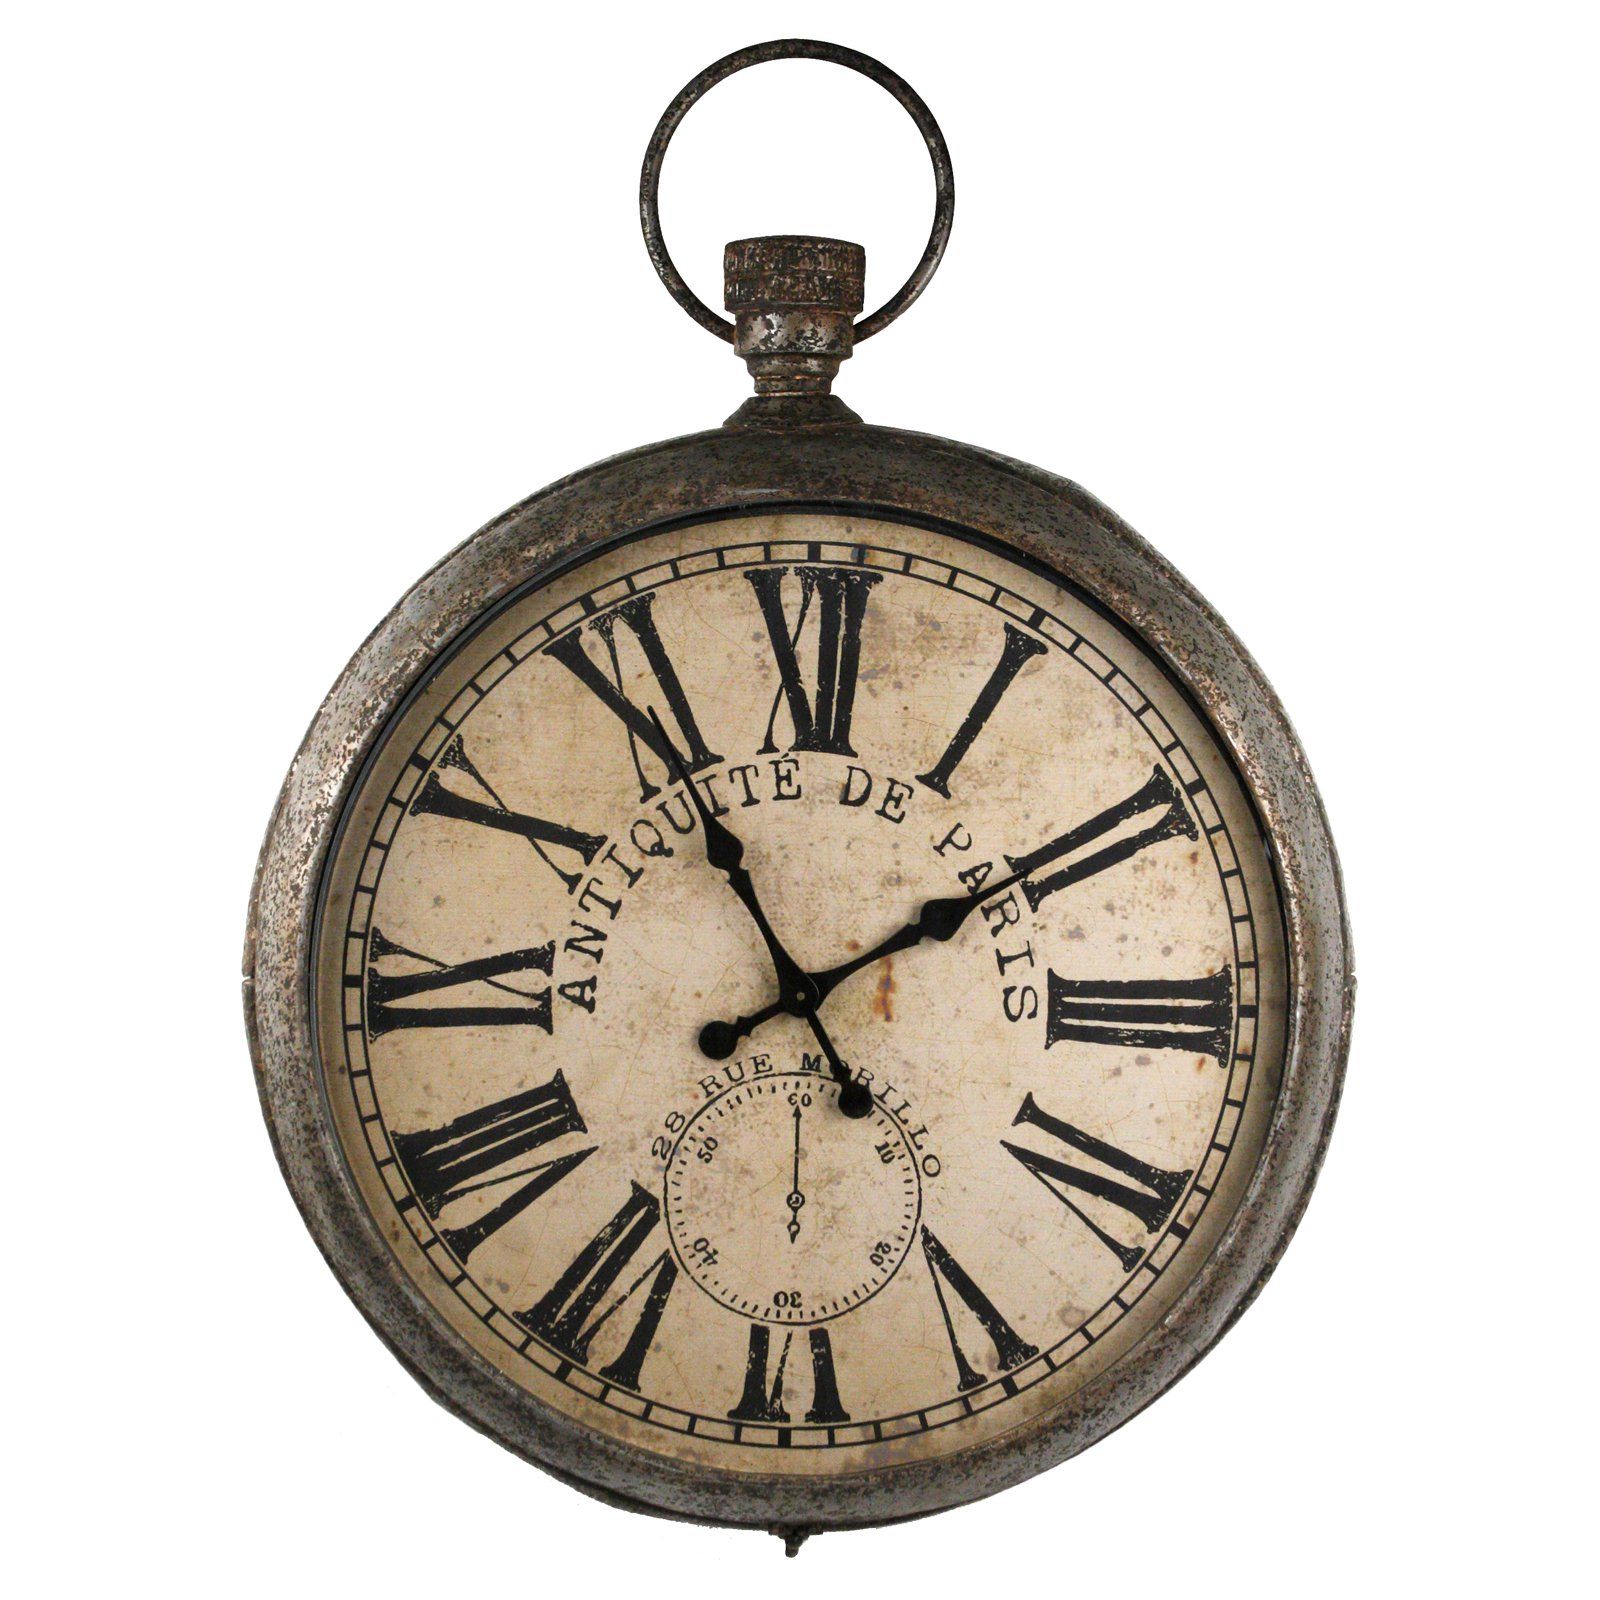 Timeless Elegance: Adding Charm with Round Clocks